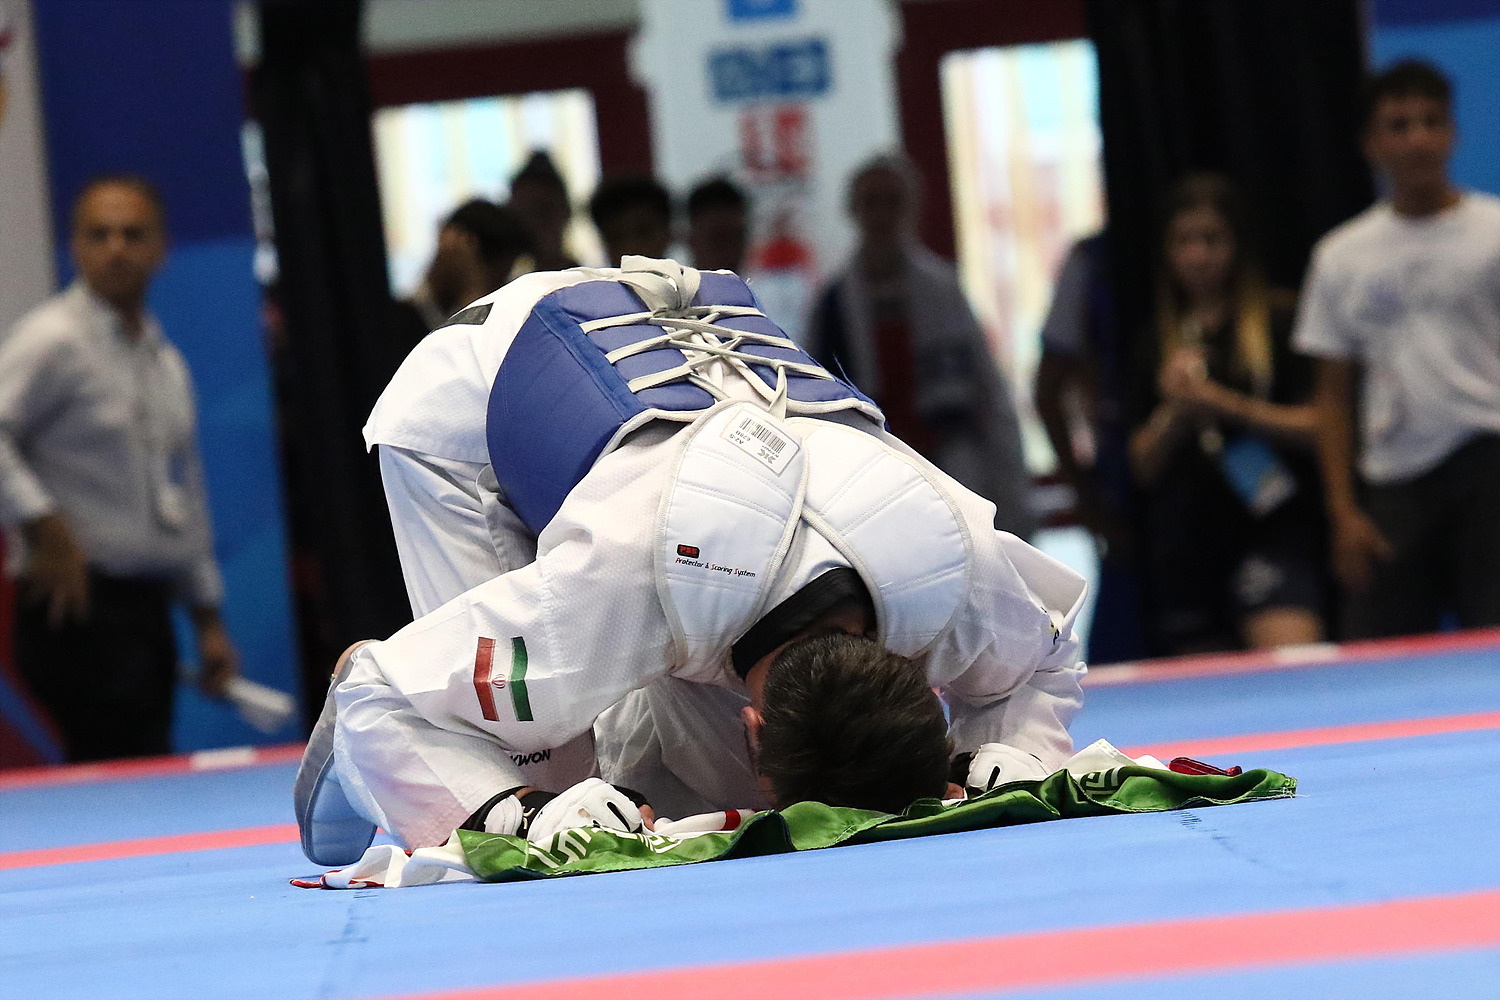 Finali di Taekwondo Bakhshikalhori Amirmohammad IRI ), Pala Casoria, Napoli 11 Luglio 2019 PHOTO POOL FOTOGRAFI UNIVERSIADE 2019